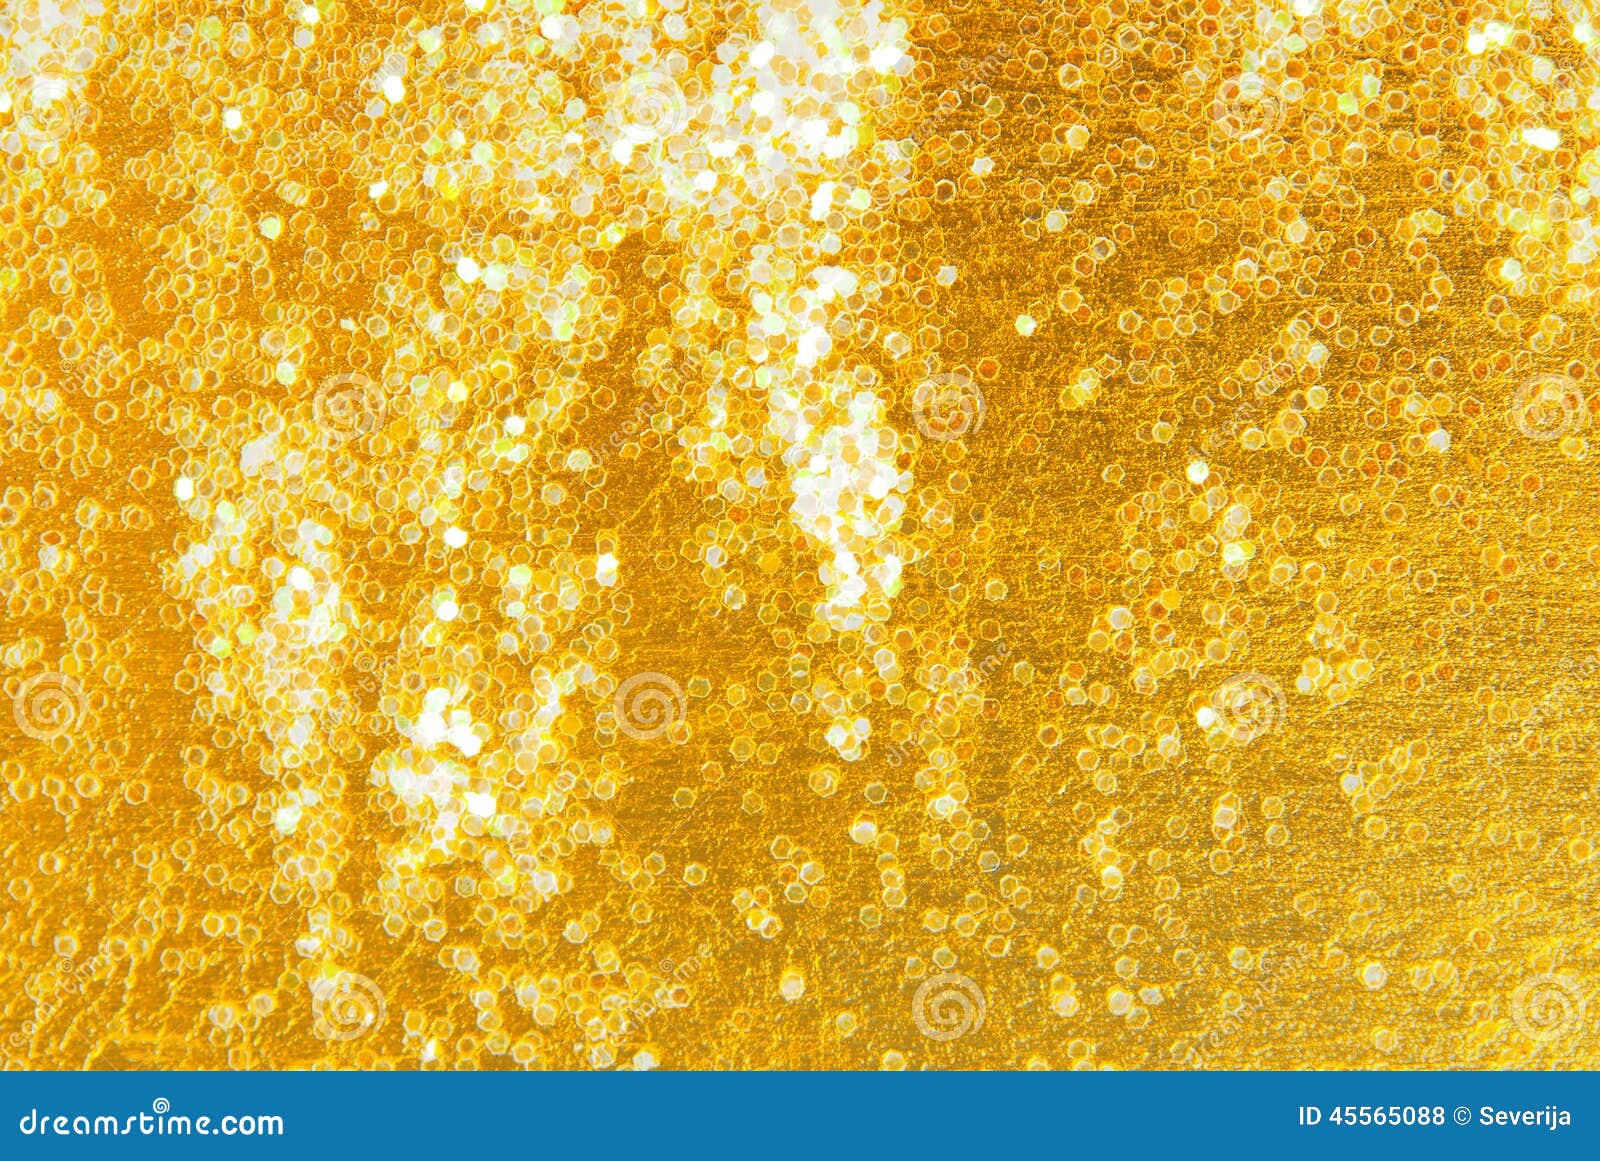 Golden Glitter Sparkle Background Stock Photo Image Of Confetti